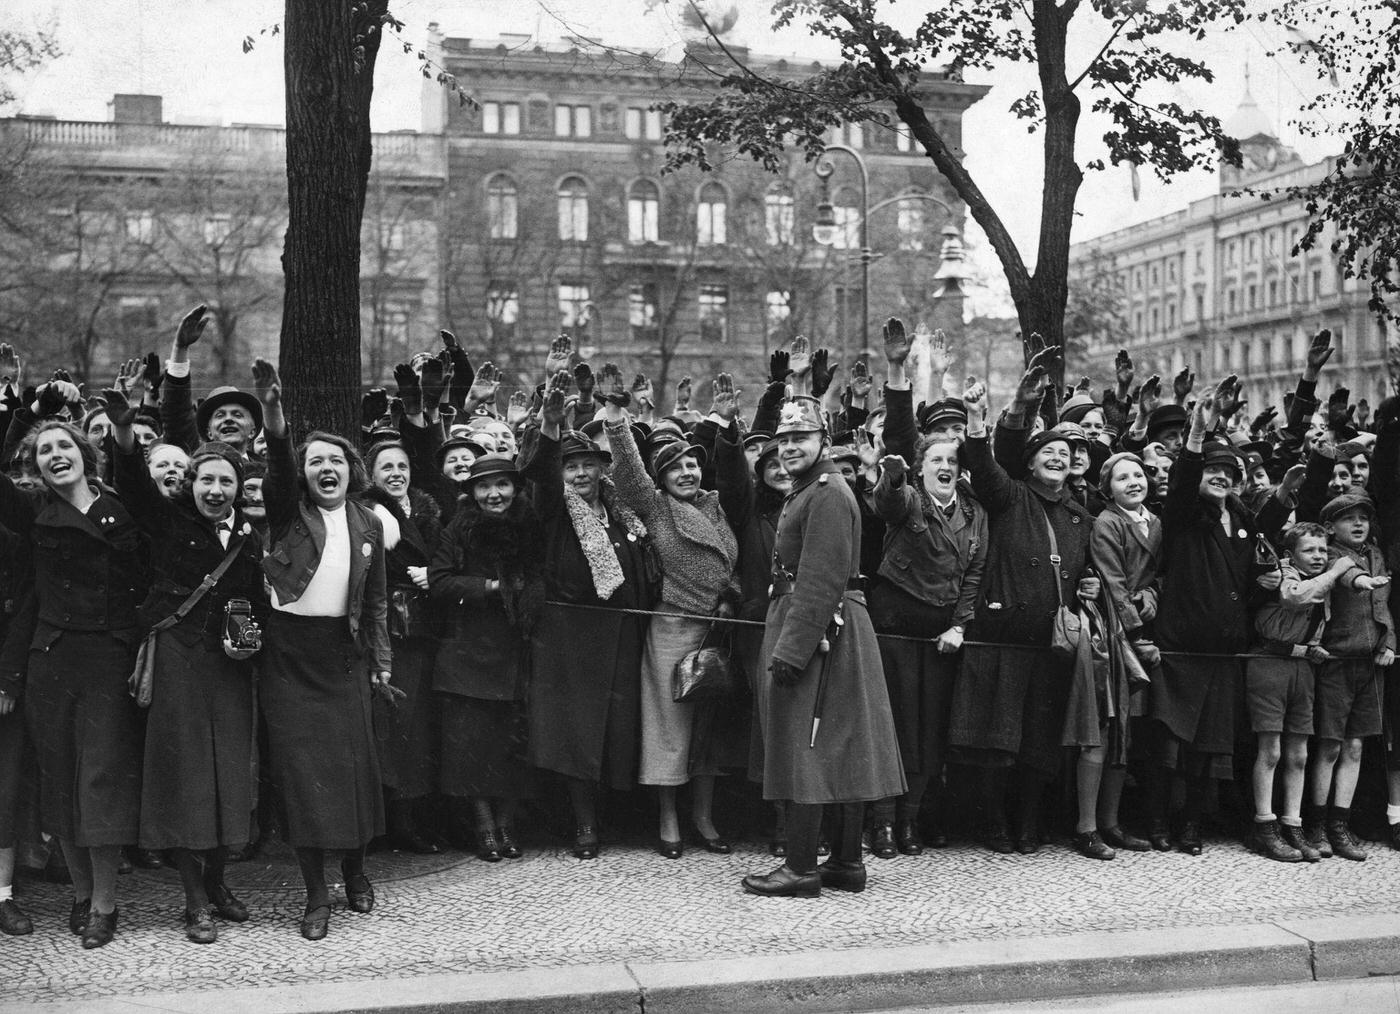 Crowd Saluting Nazis During Parade, Berlin, 1930s